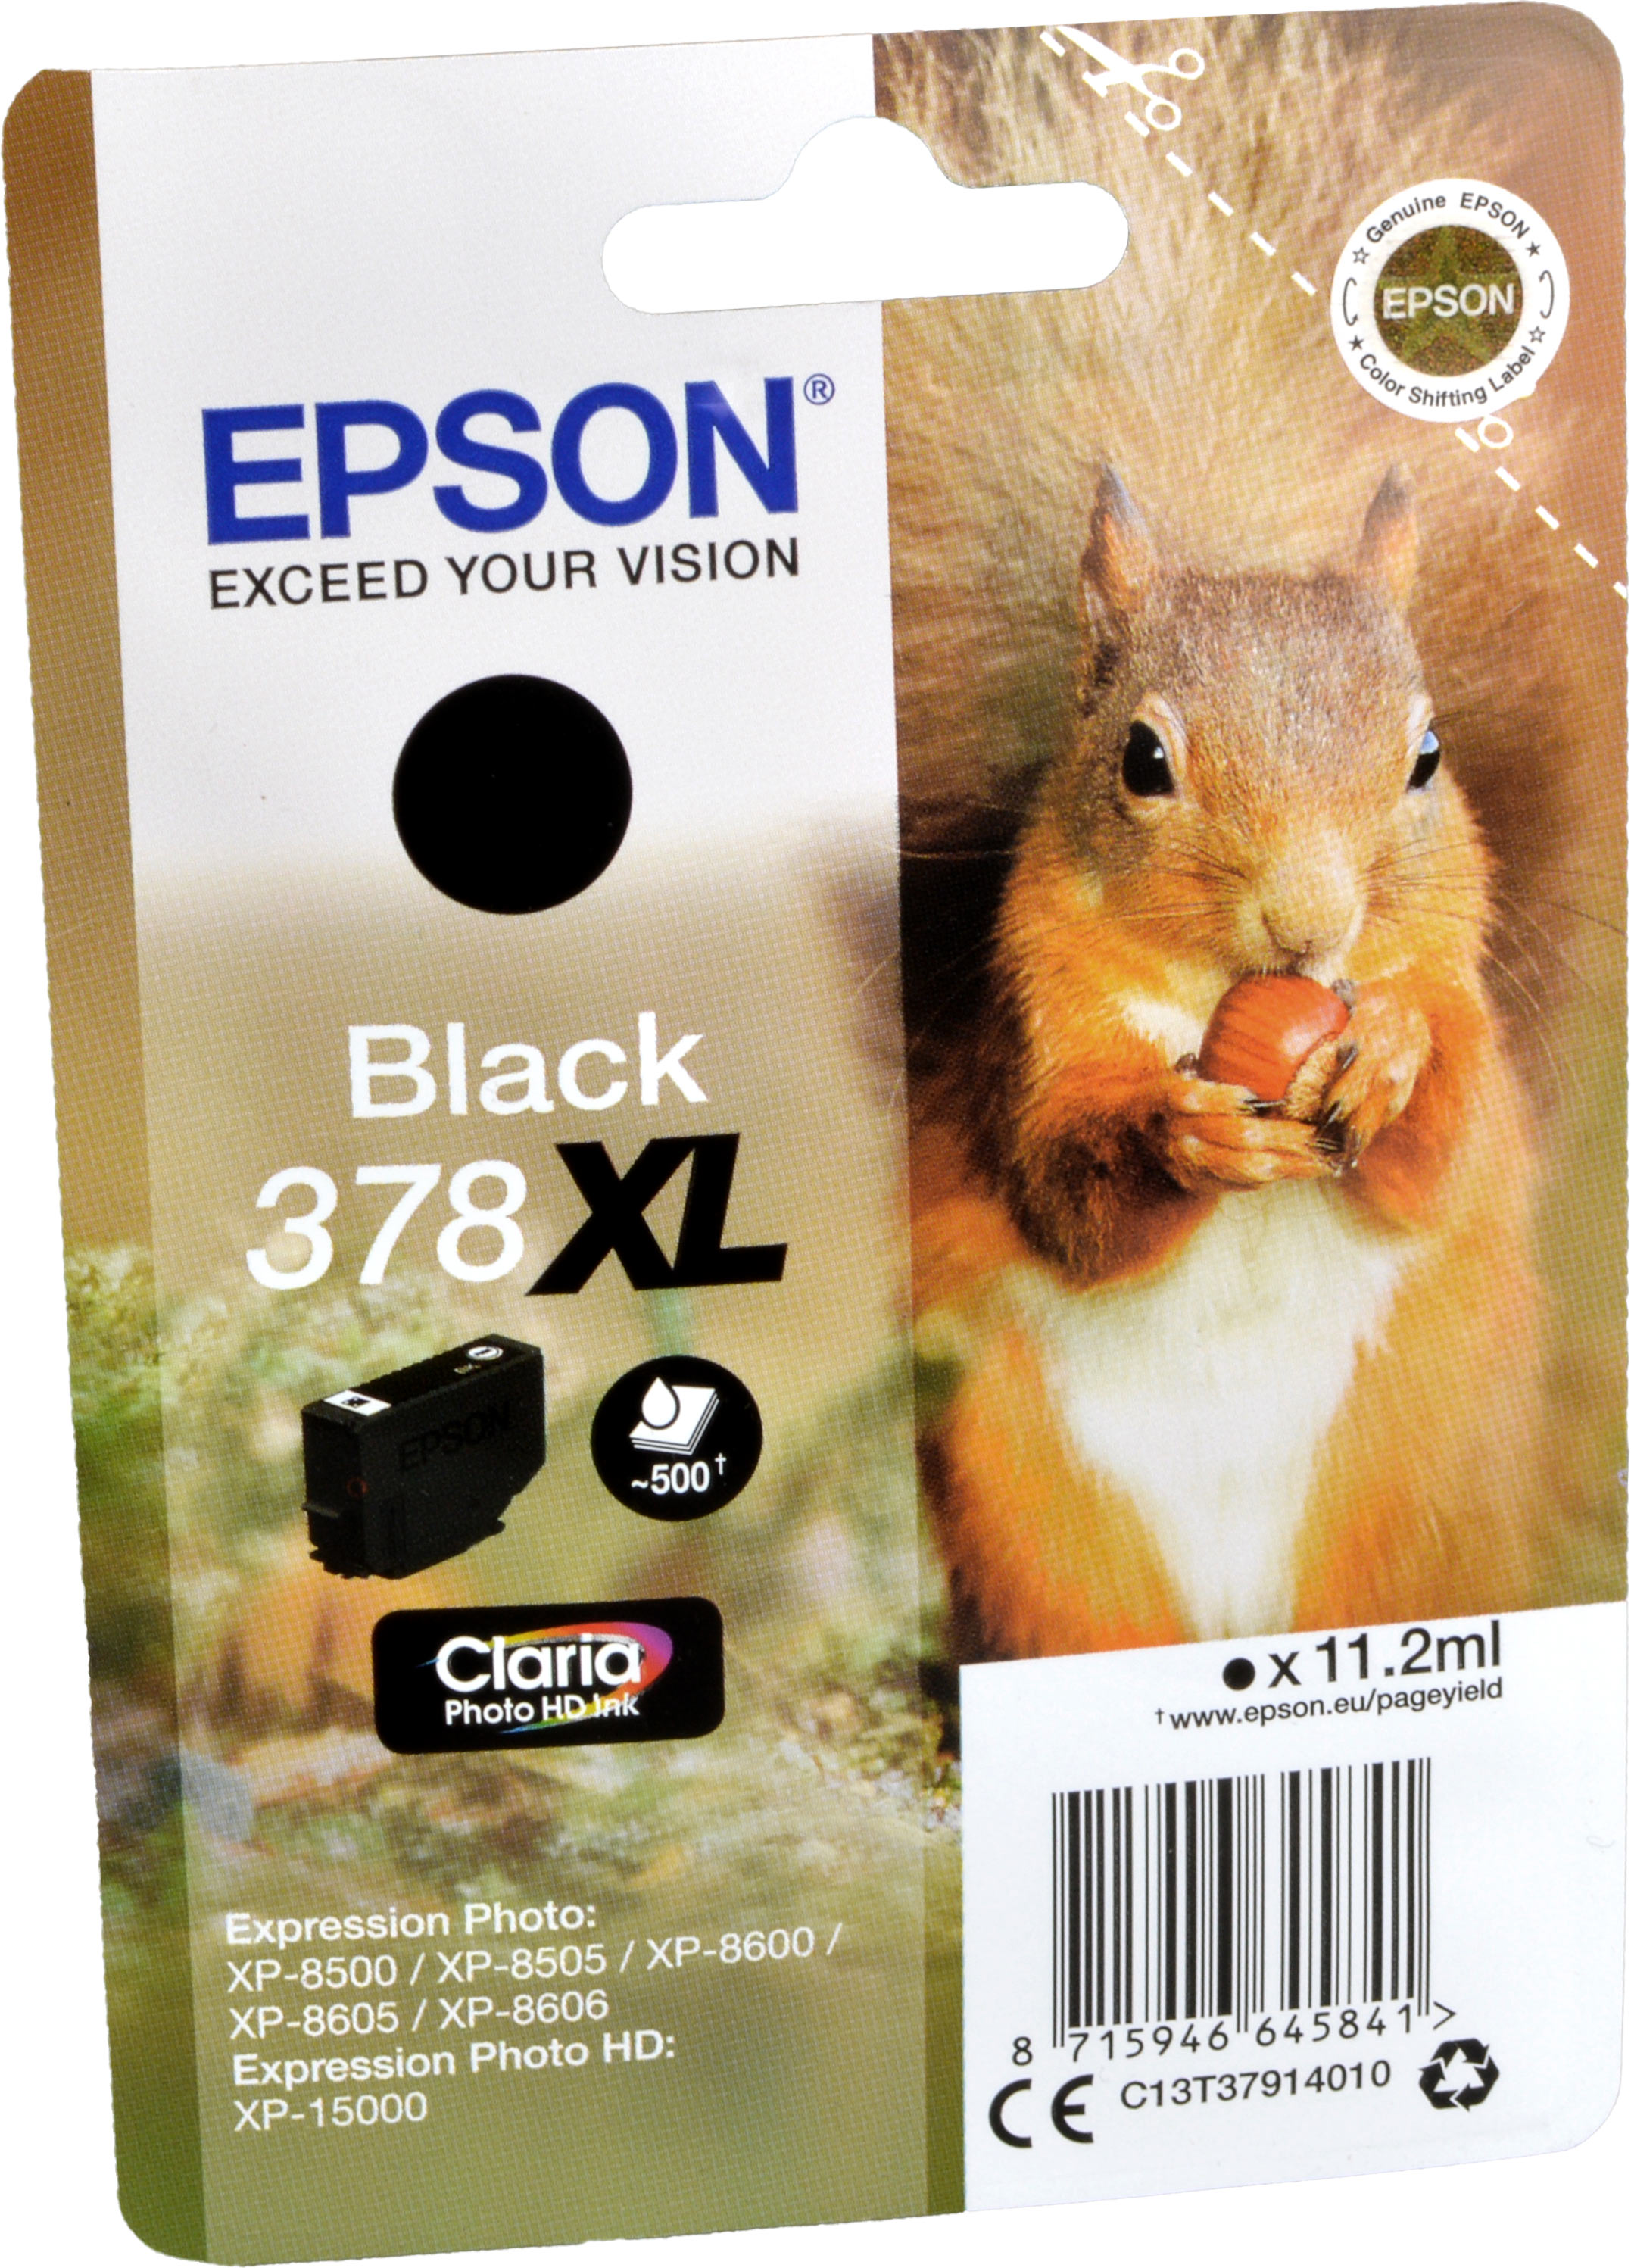 Epson Tinte C13T37914010  Black 378XL  schwarz